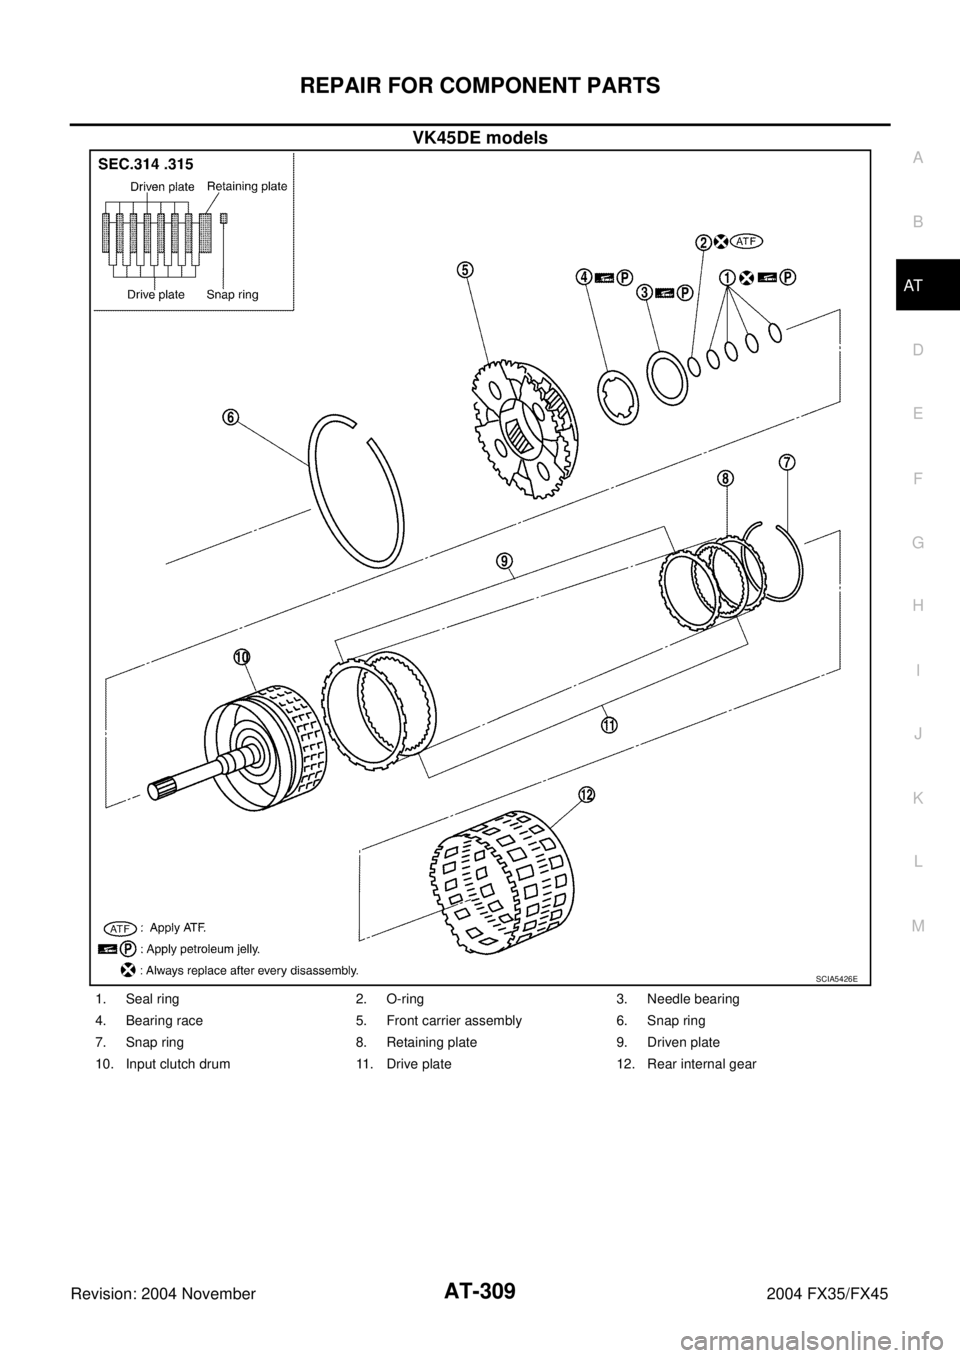 INFINITI FX35 2004  Service Manual REPAIR FOR COMPONENT PARTS
AT-309
D
E
F
G
H
I
J
K
L
MA
B
AT
Revision: 2004 November 2004 FX35/FX45
VK45DE models
SCIA5426E
1. Seal ring 2. O-ring 3. Needle bearing
4. Bearing race 5. Front carrier ass